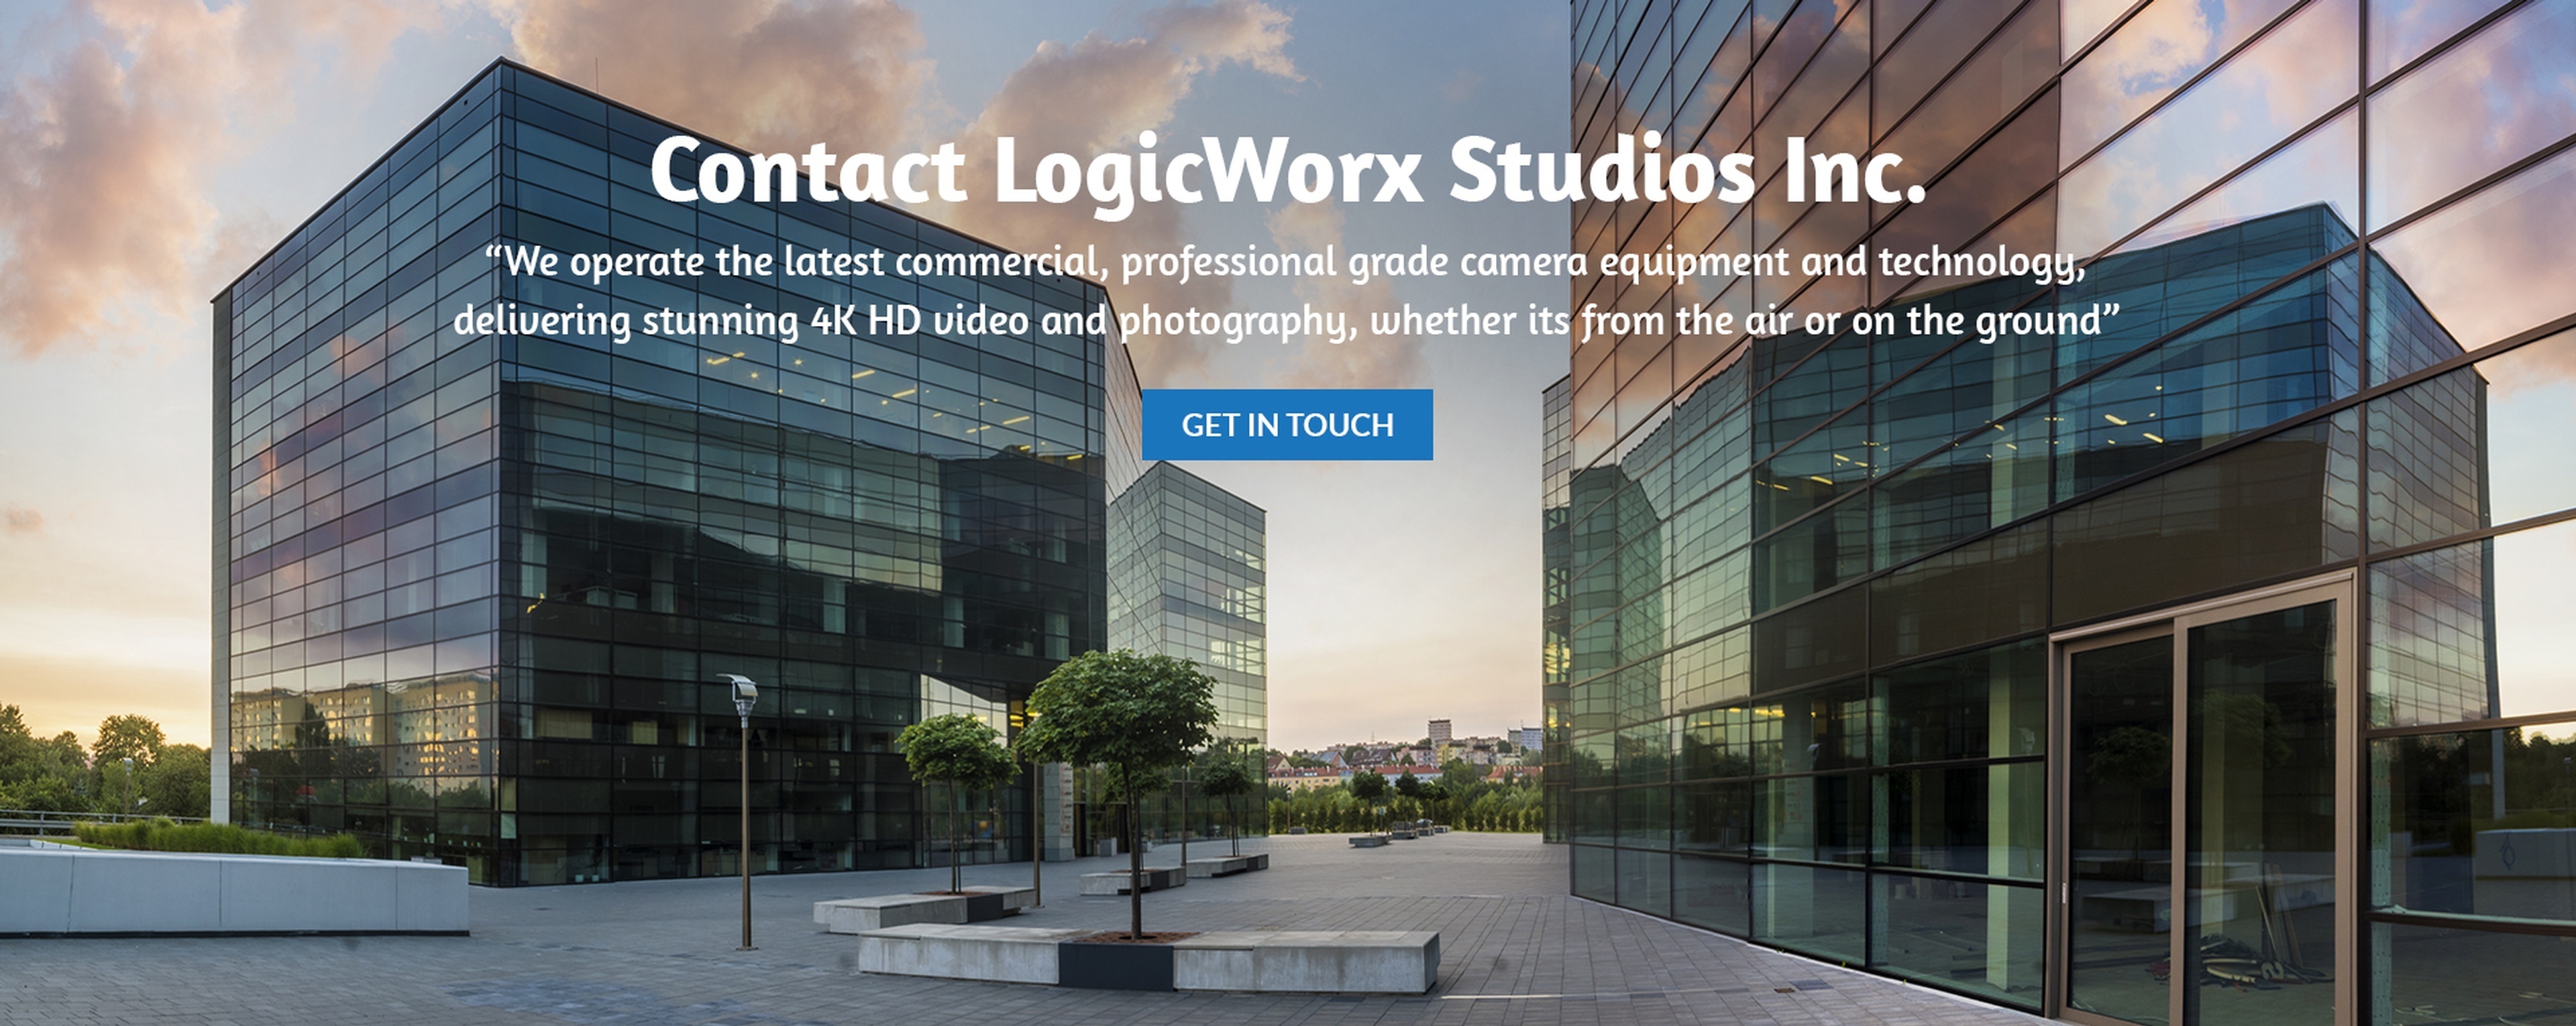 Contact LogicWorx Studios Inc. - Commercial Event Photographer Markham